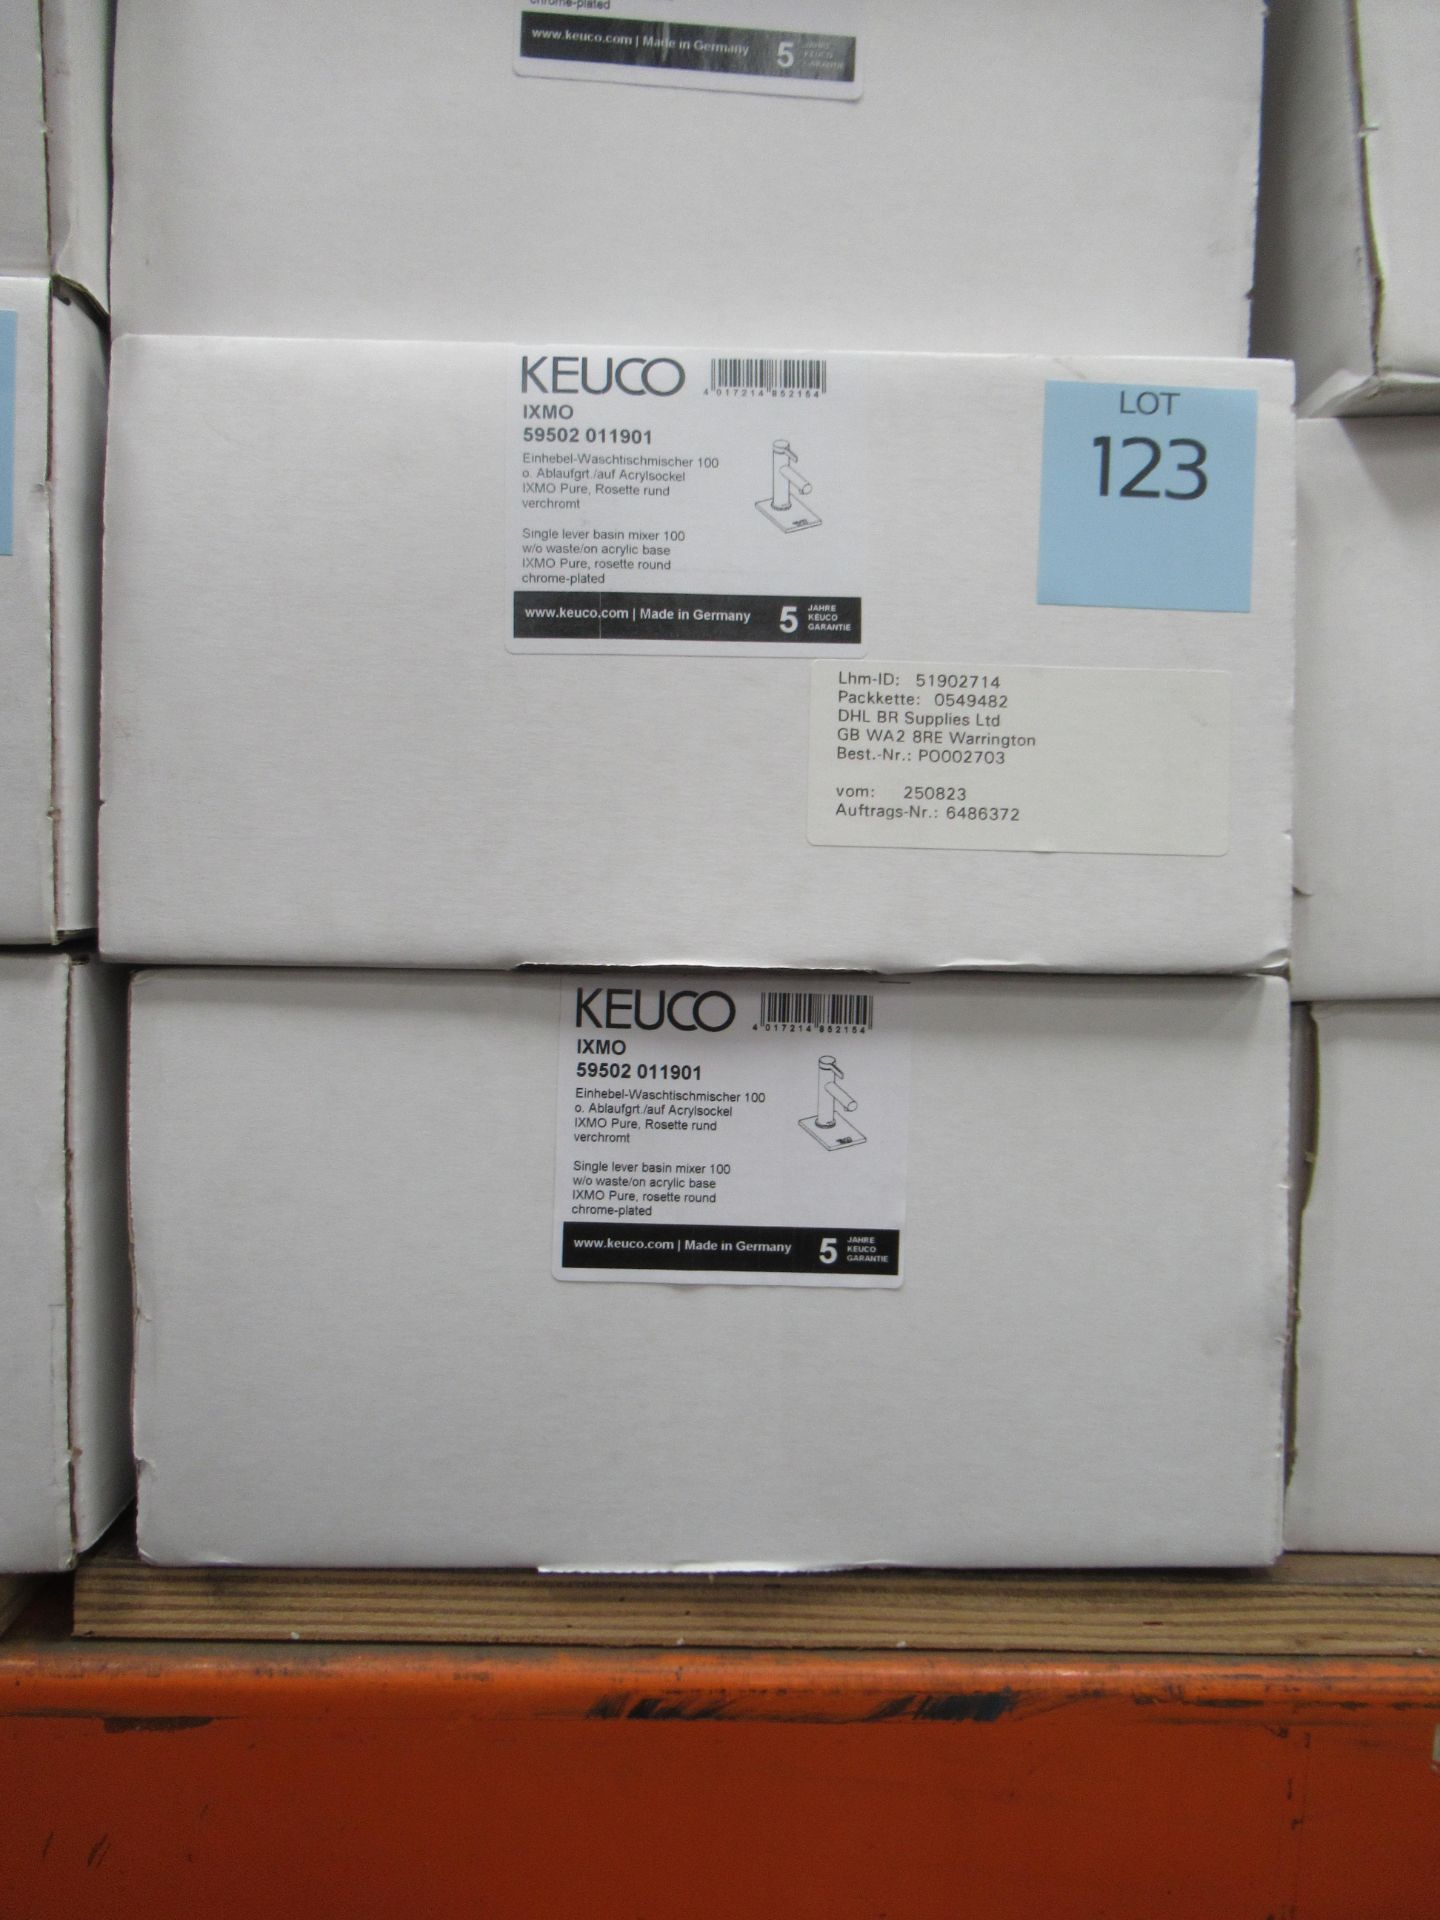 2 x Keuco IXMO Single Lever Basin Mixer 100-Tap, Chrome Plated, P/N 59502-011901